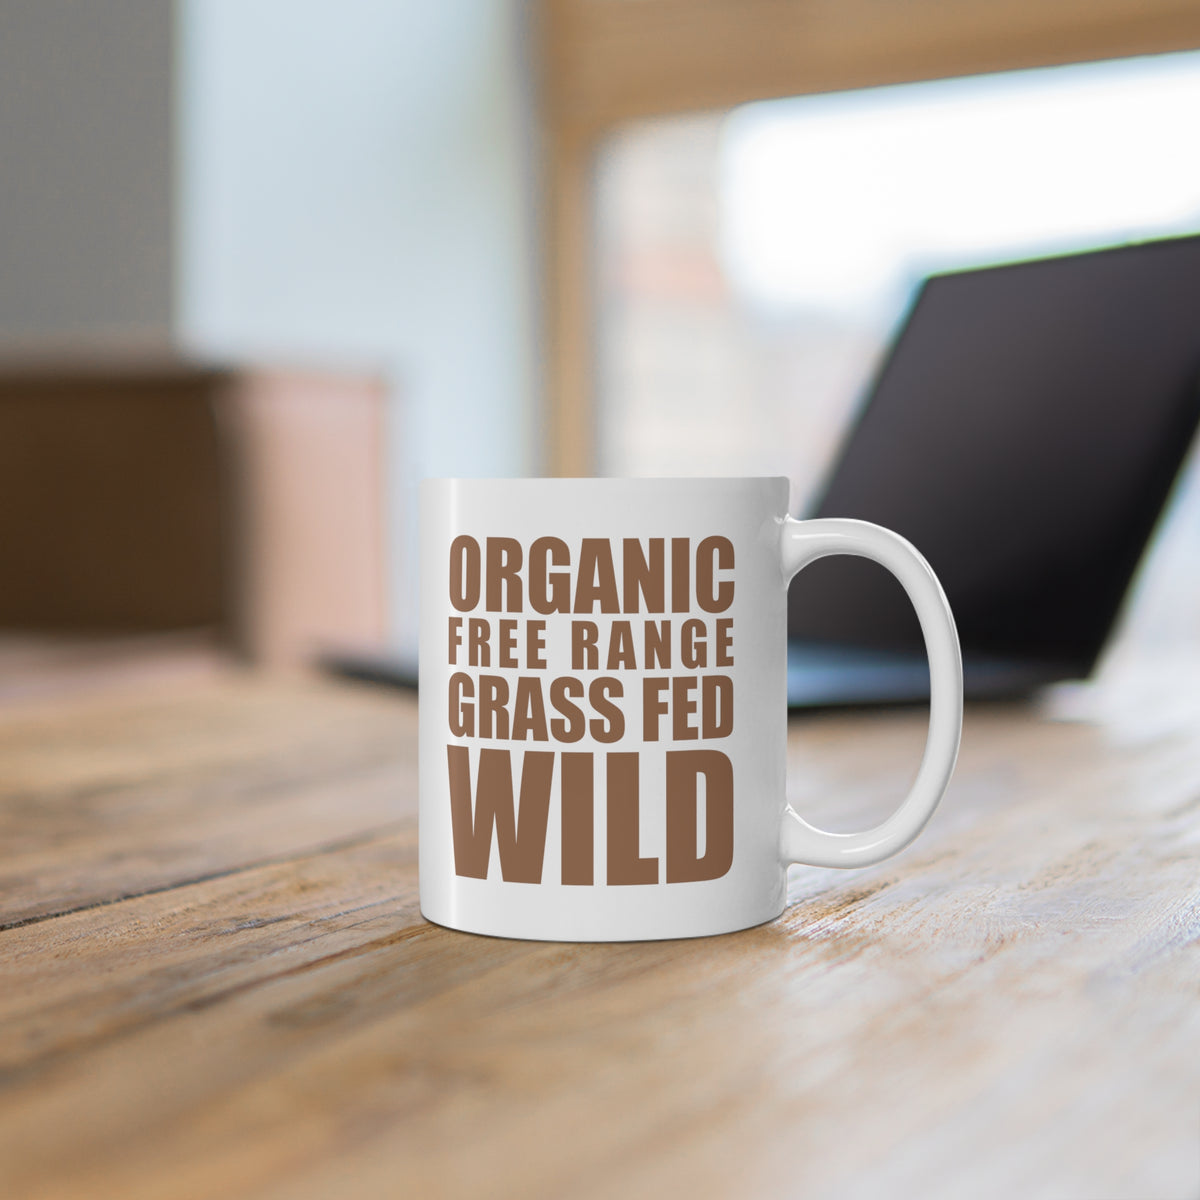 Organic, free range, grass fed & wild